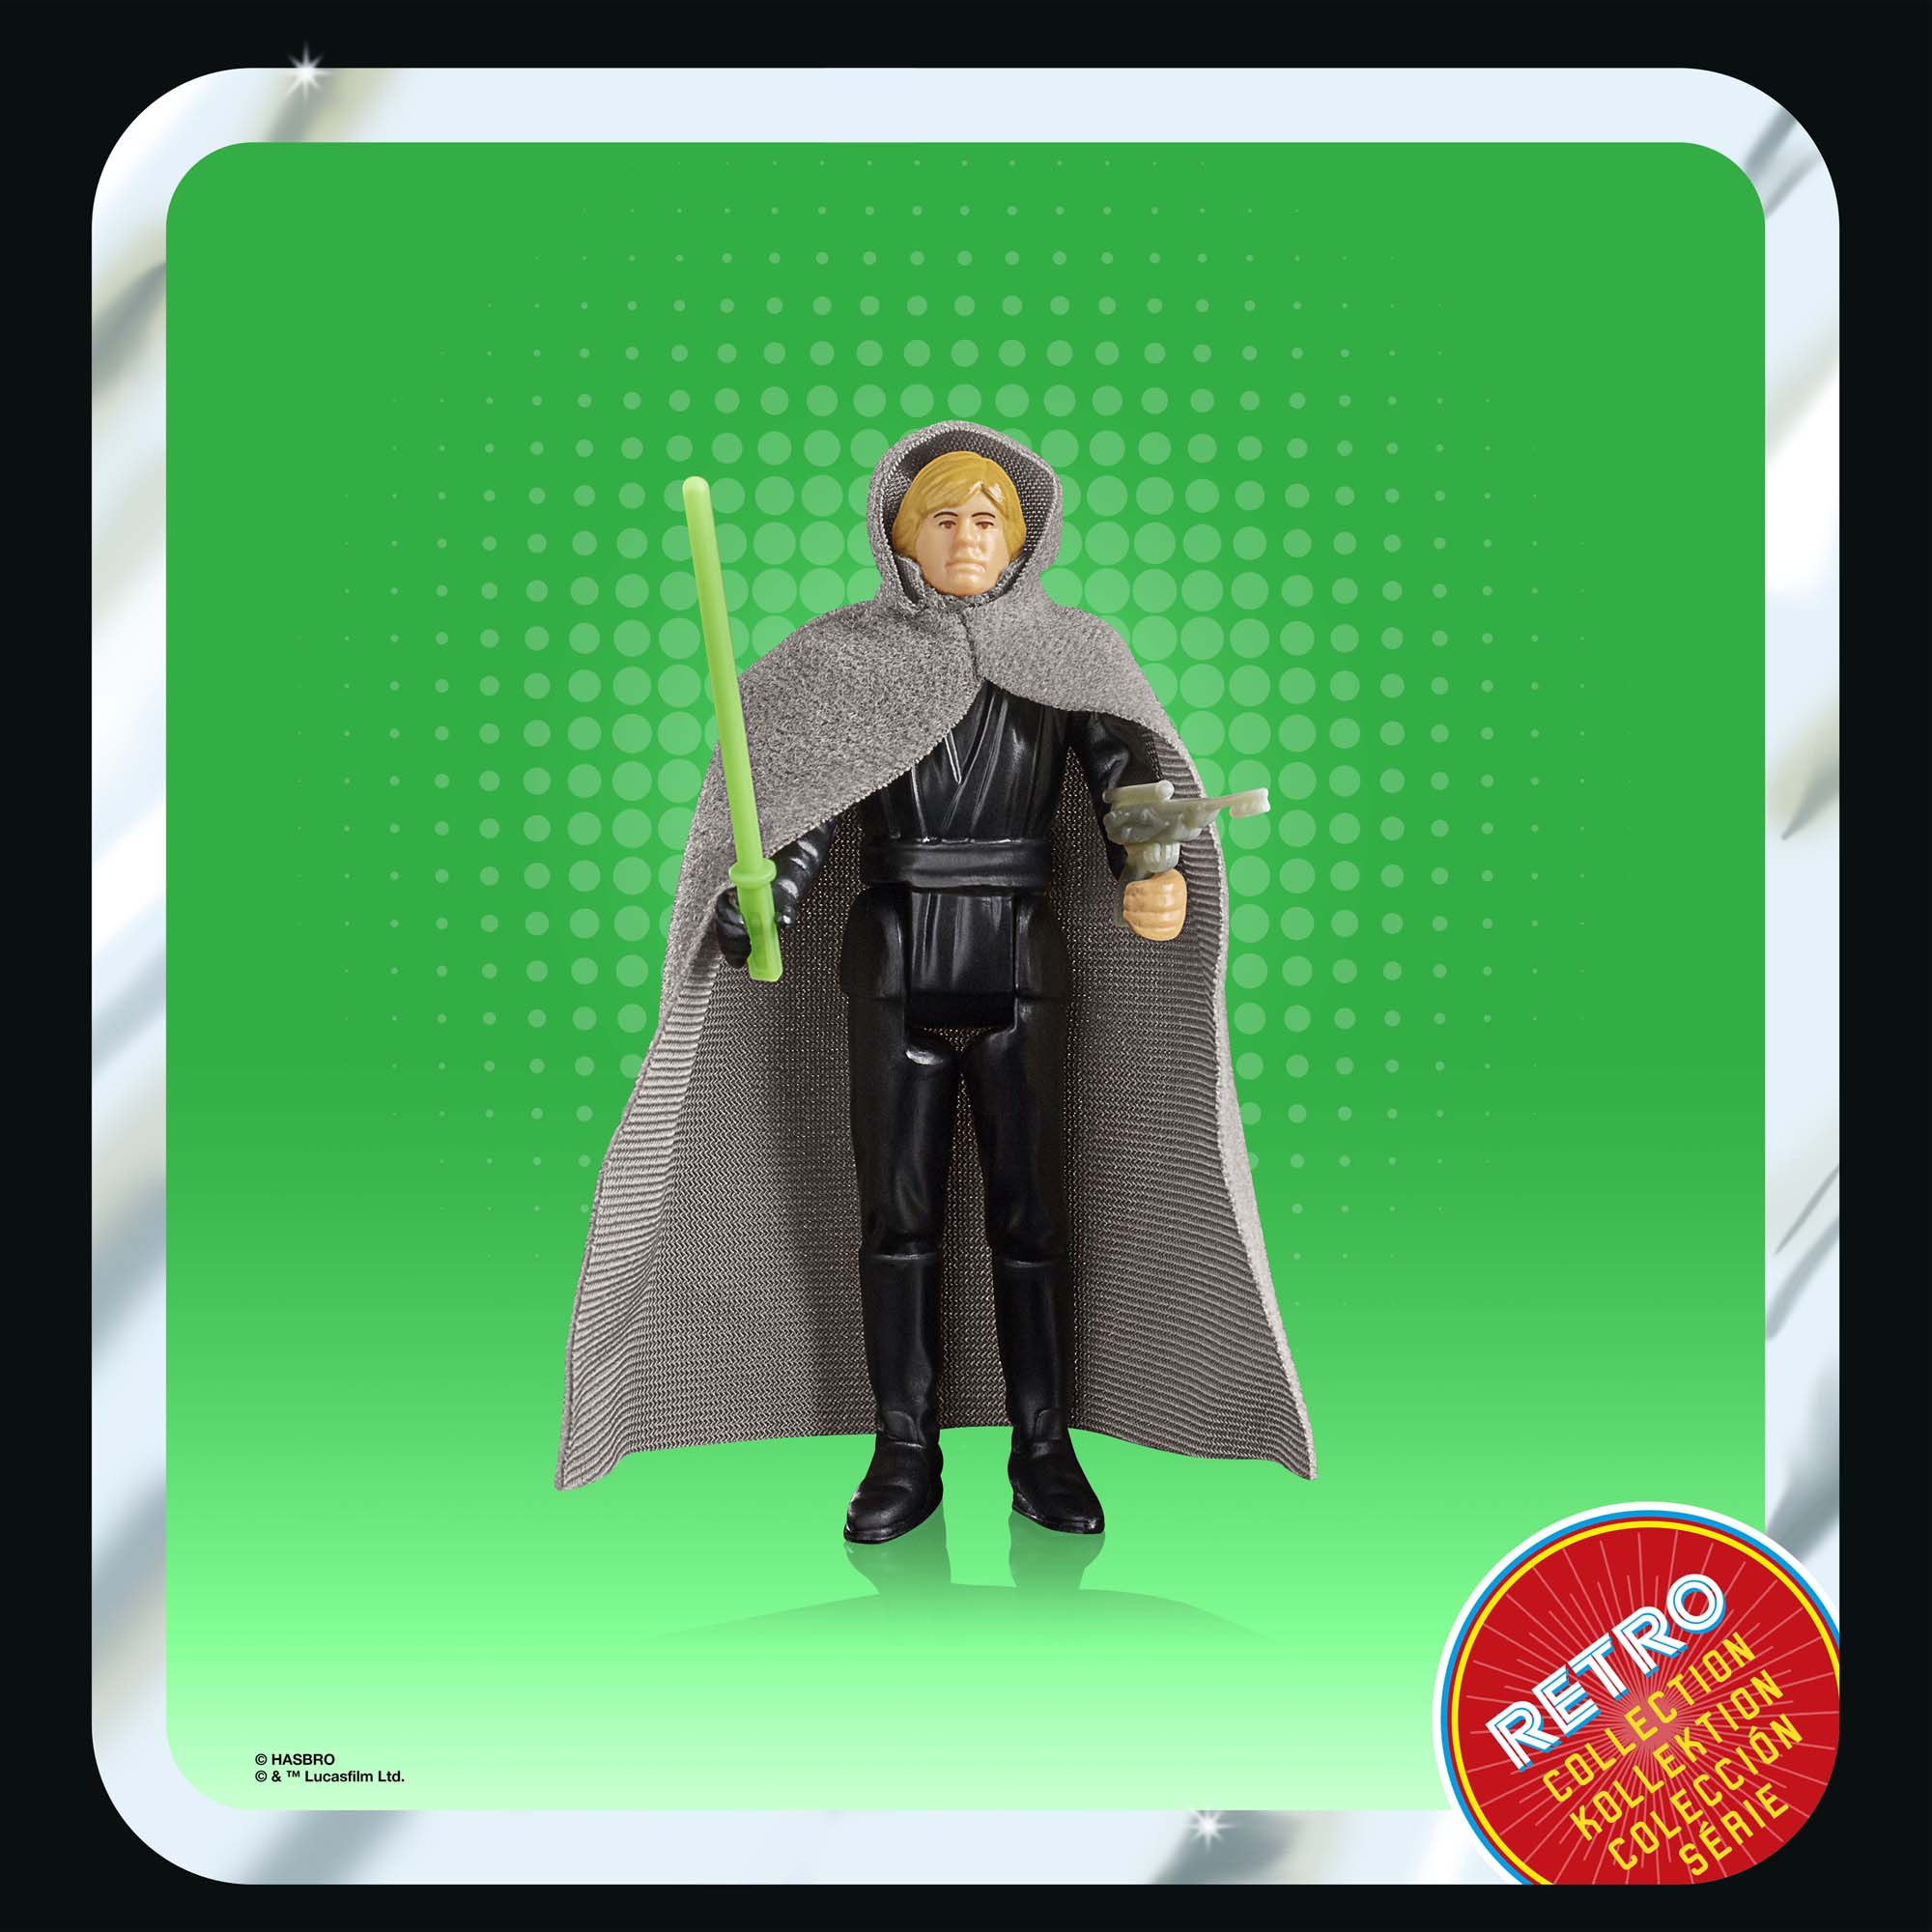 Star Wars Retro Collection Luke Skywalker (Jedi Knight) F72745L20 5010996137777